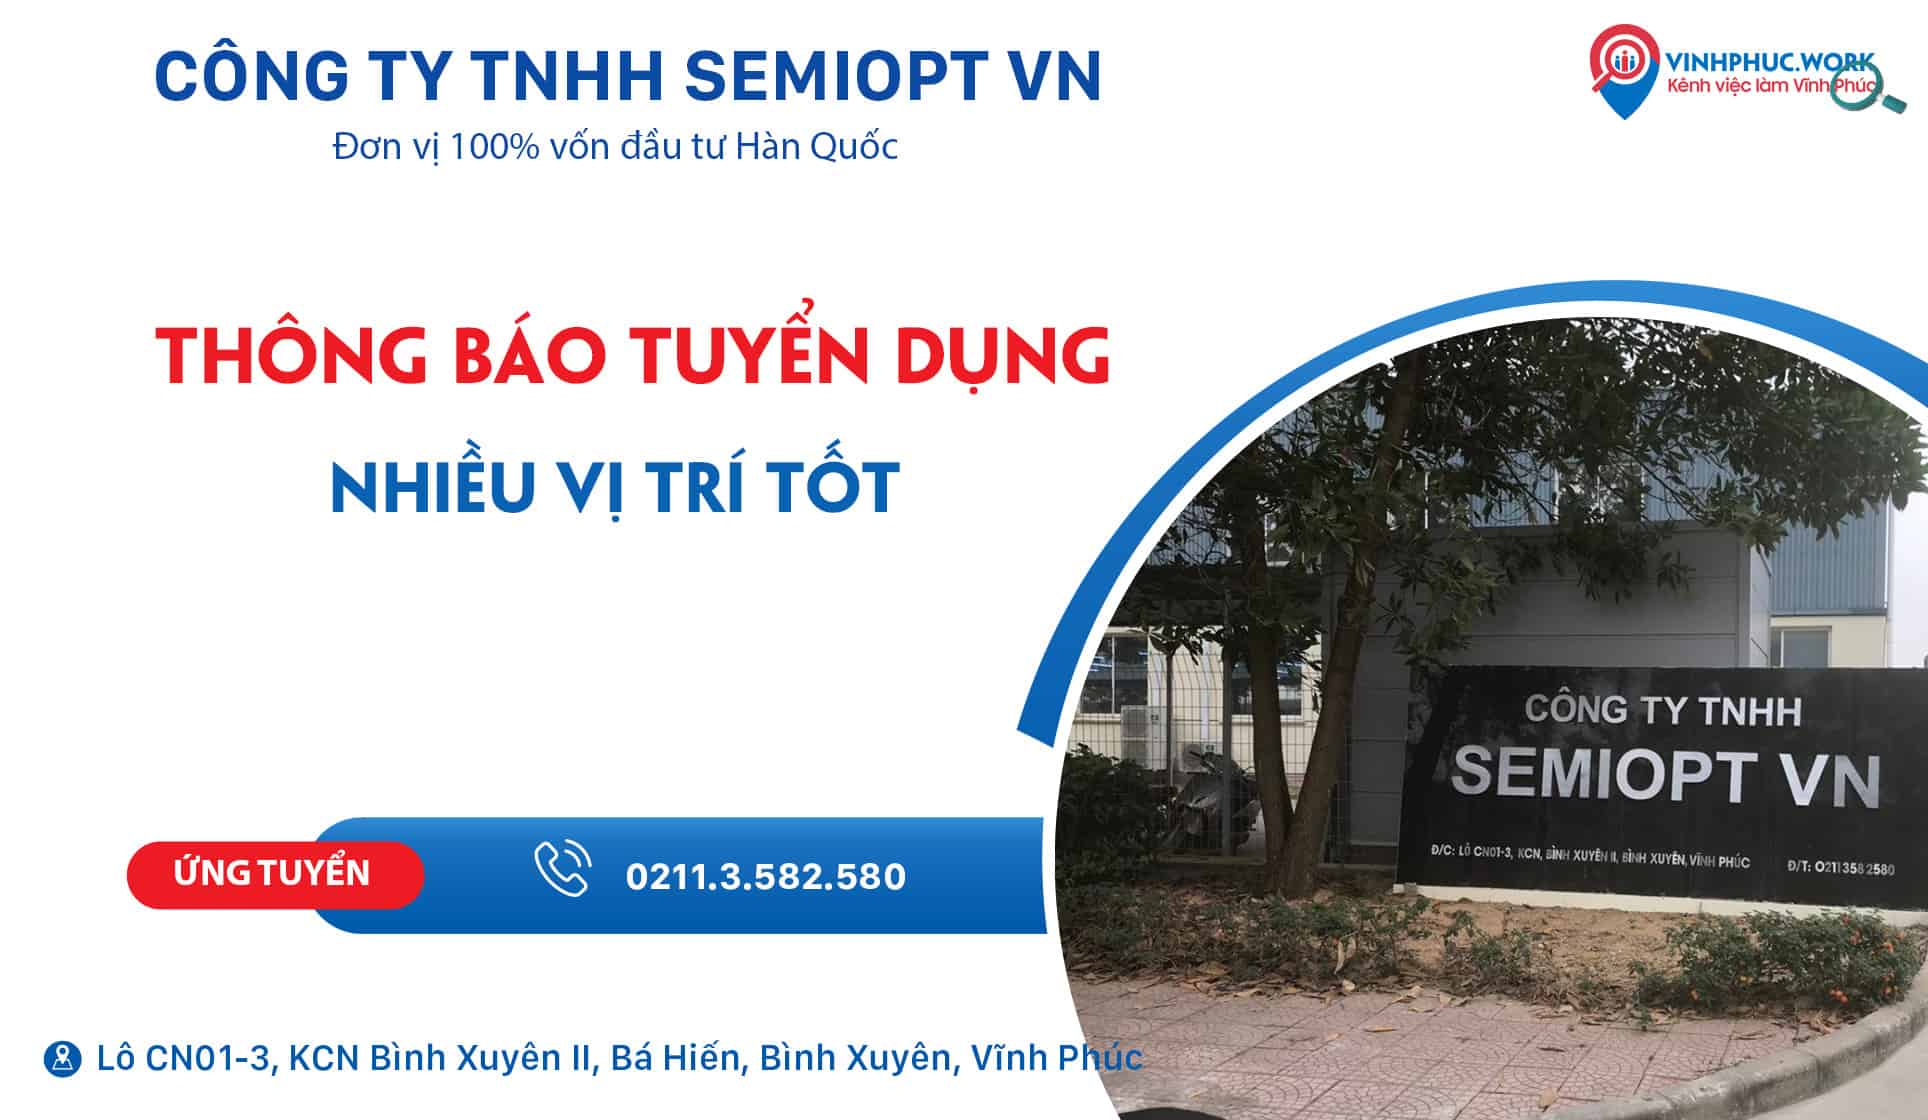 image cong ty tnhh semiopt vn thong bao den 07 vi tri tot 7 290224 023223